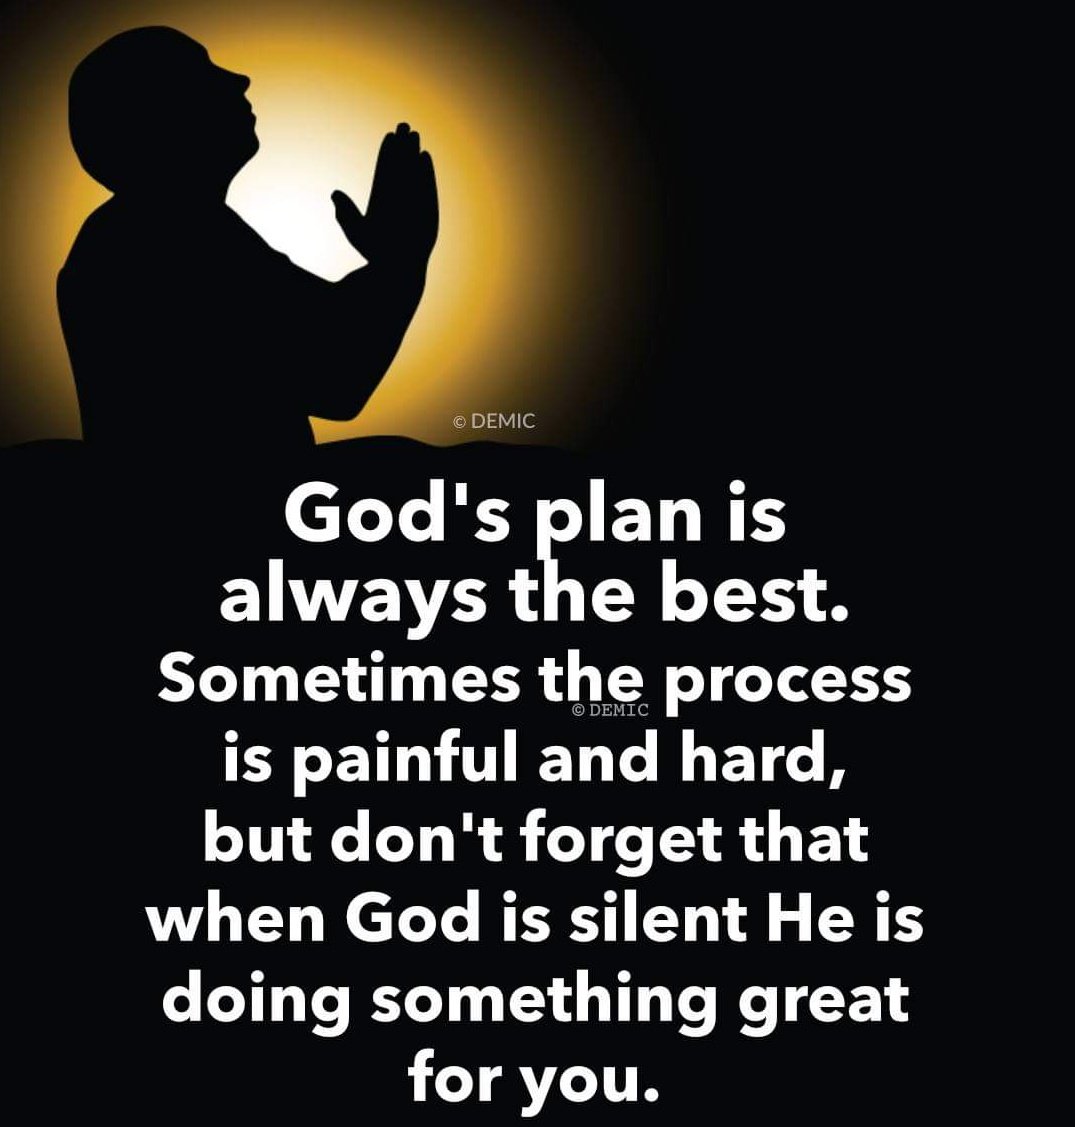 God's plan is always the best. ❤